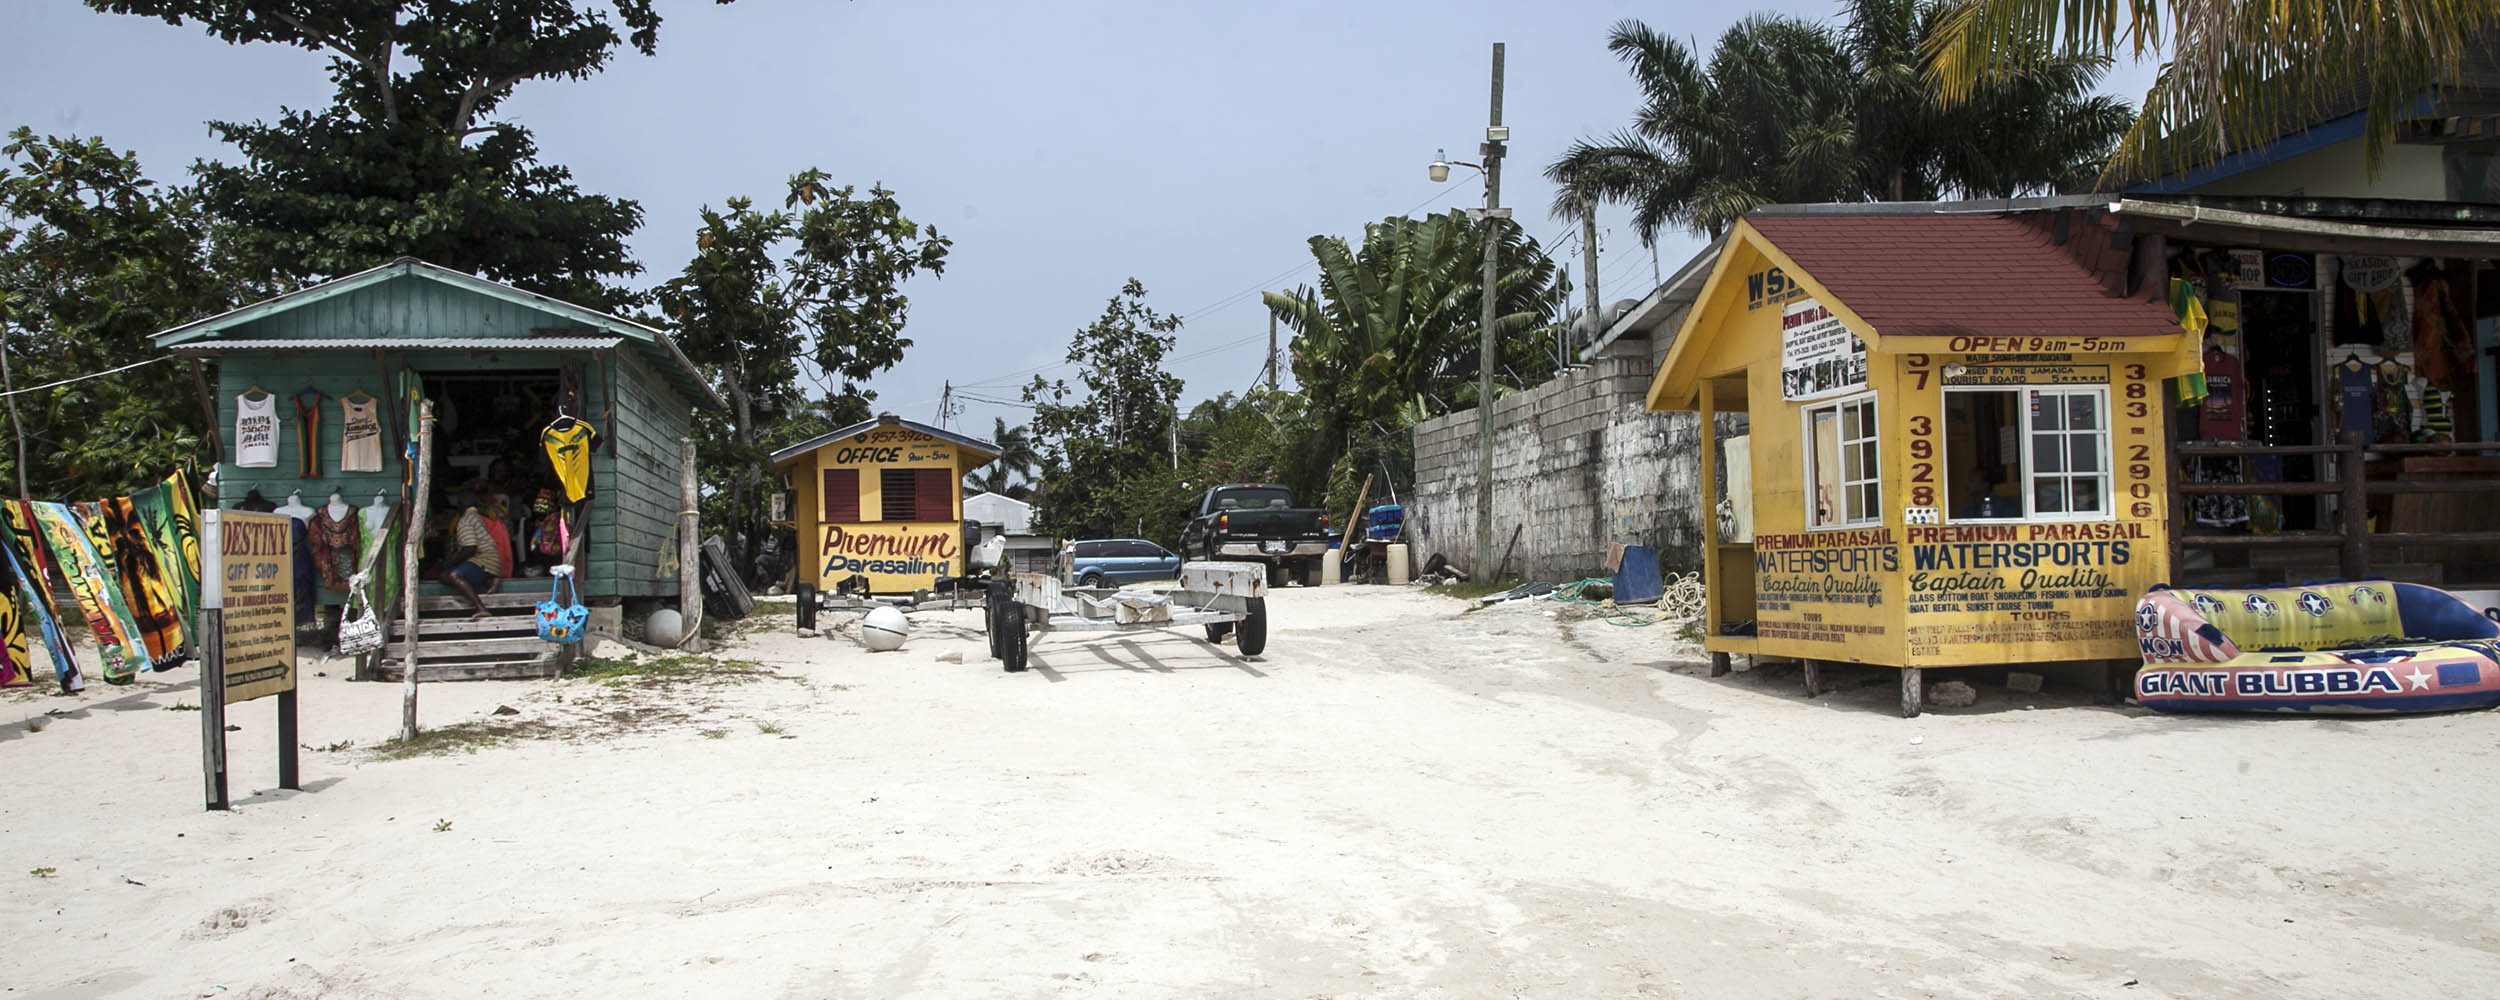 Premium Parasail - Negril Beach, Negril Jamaica